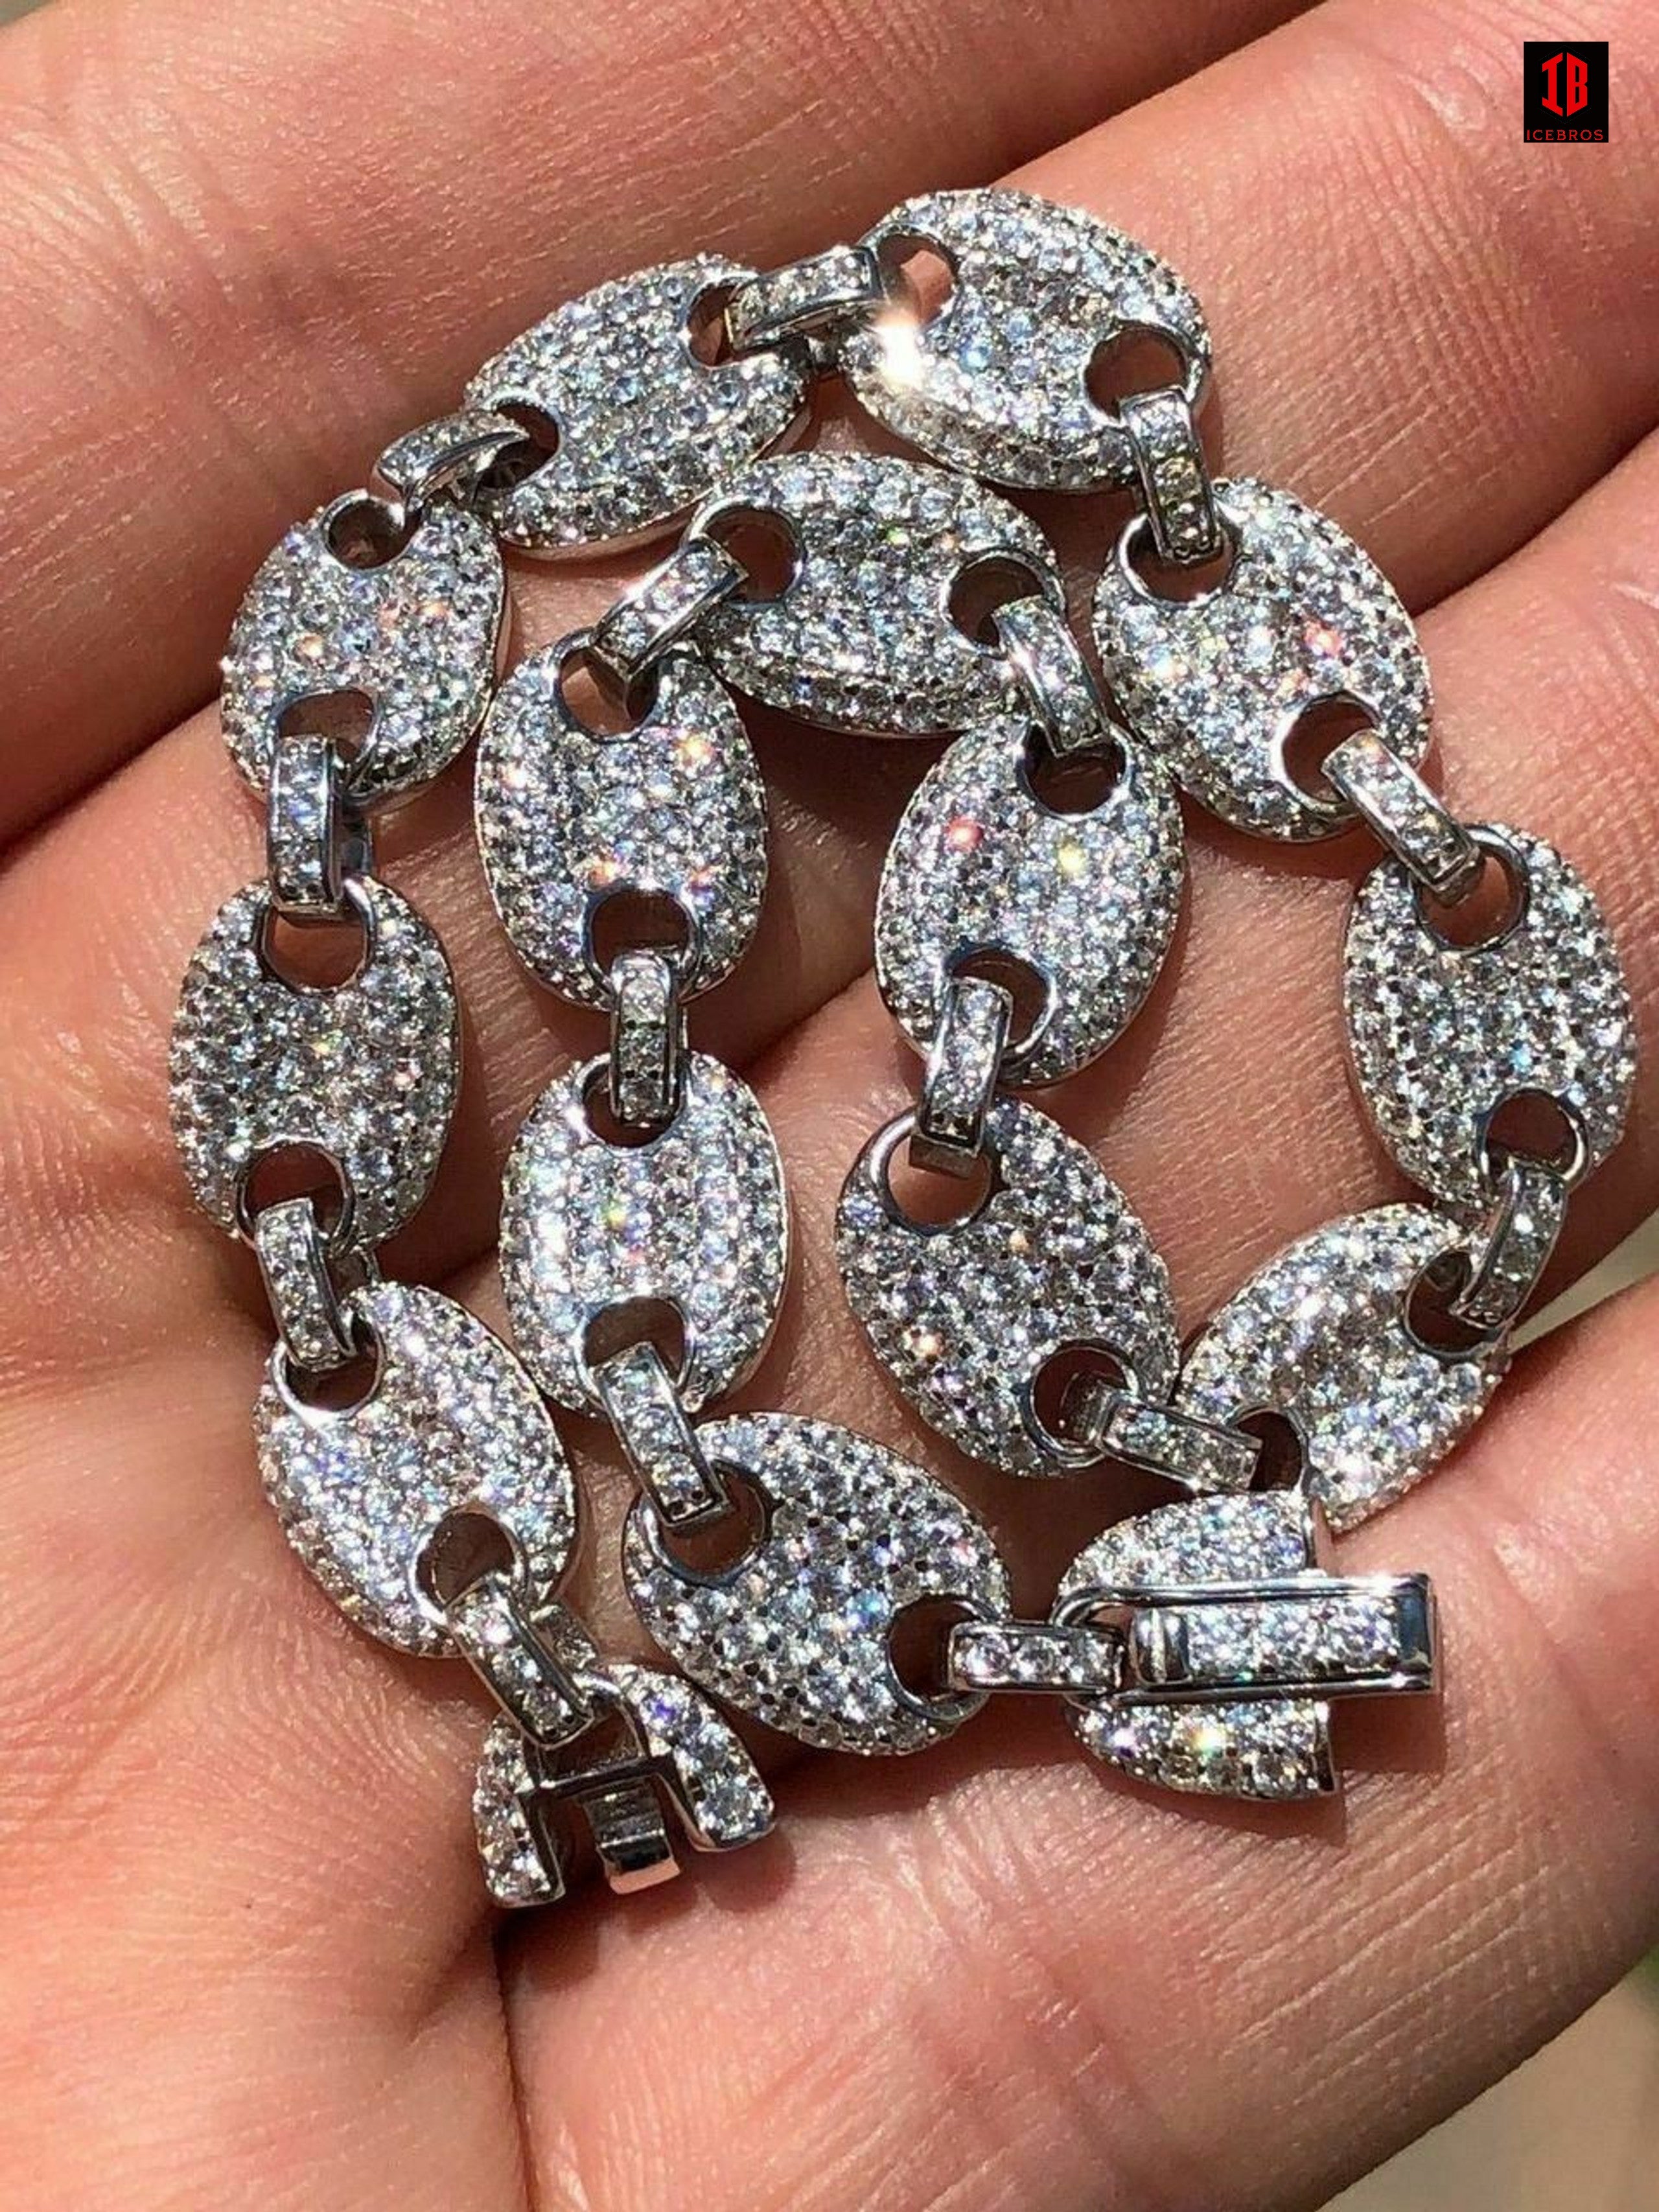 Men's Women's 8mm Gucci Link Bracelet Solid 925 Sterling Silver